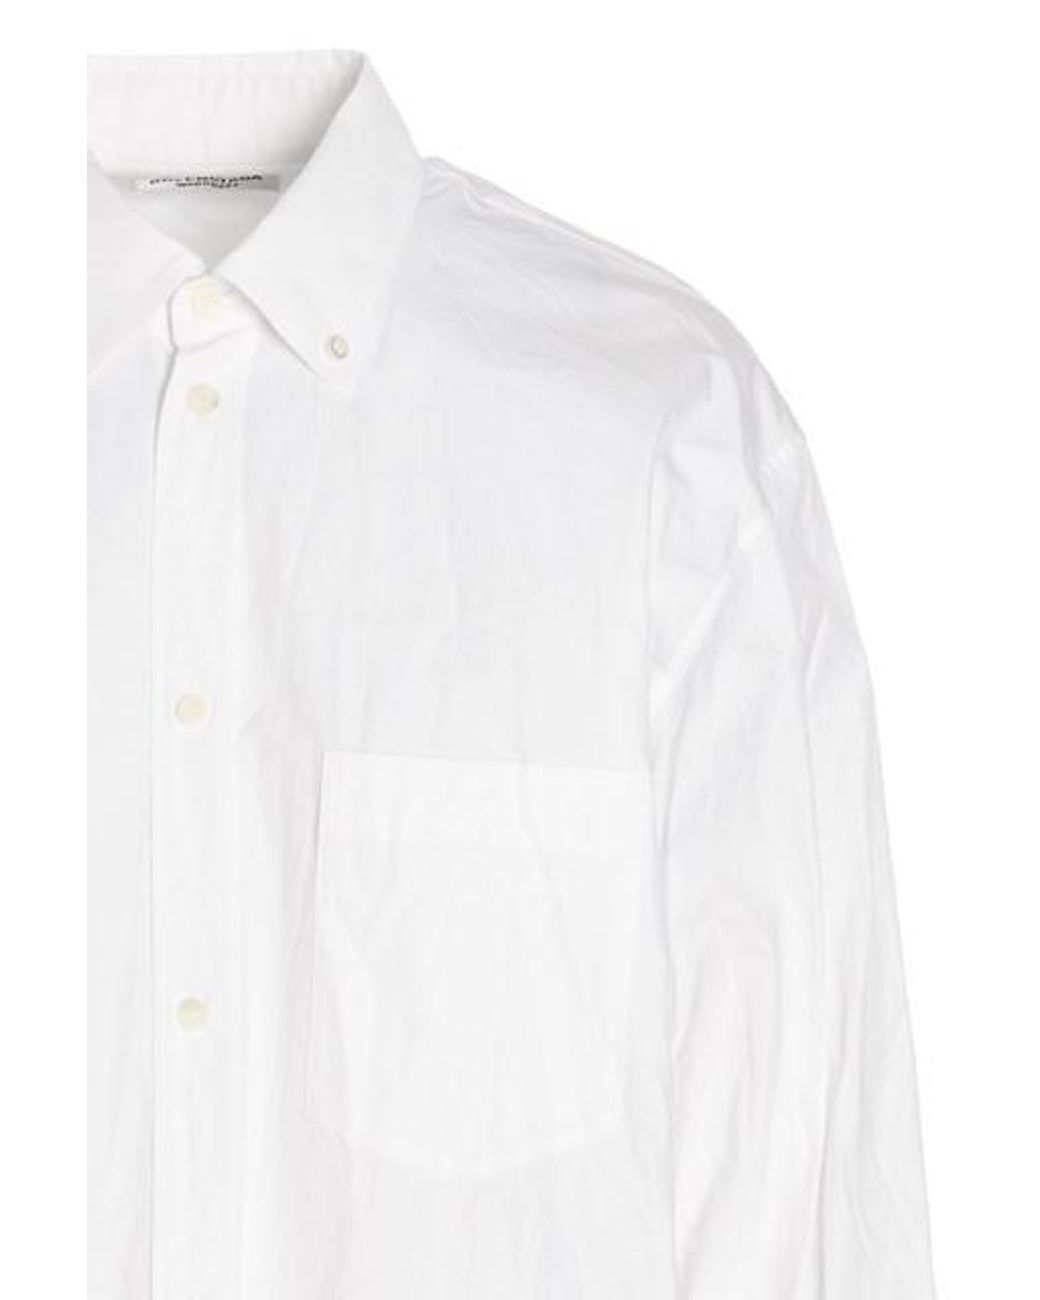 Balenciaga Crinkled-effect Shirt in White - Lyst